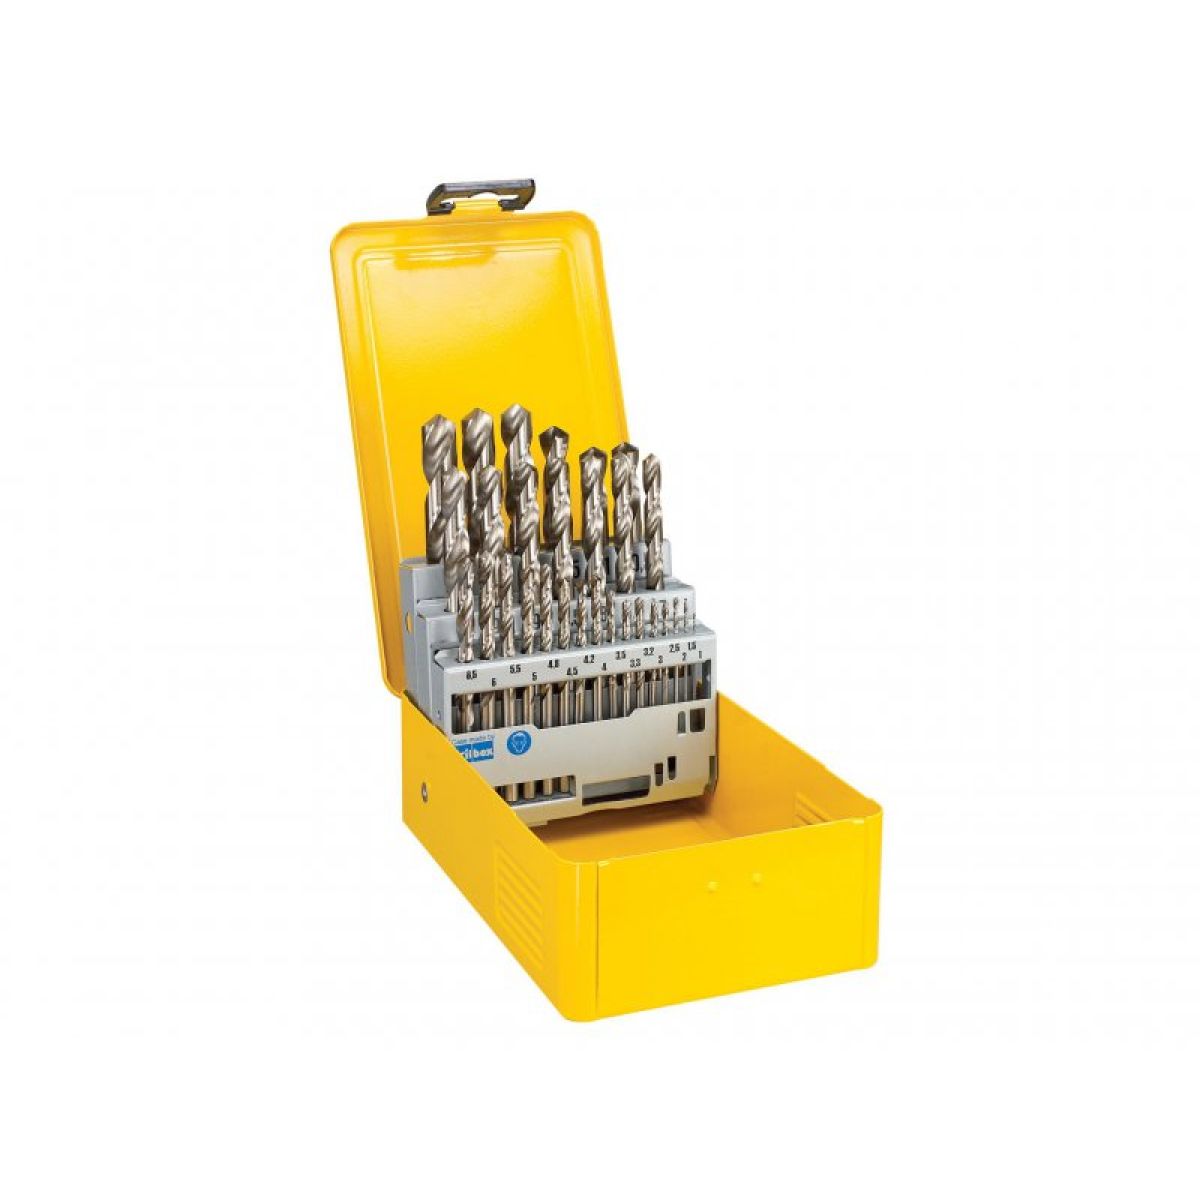 Dewalt Dcd730 Cordless Drill (Type Spare Parts | Tools Parts Direct